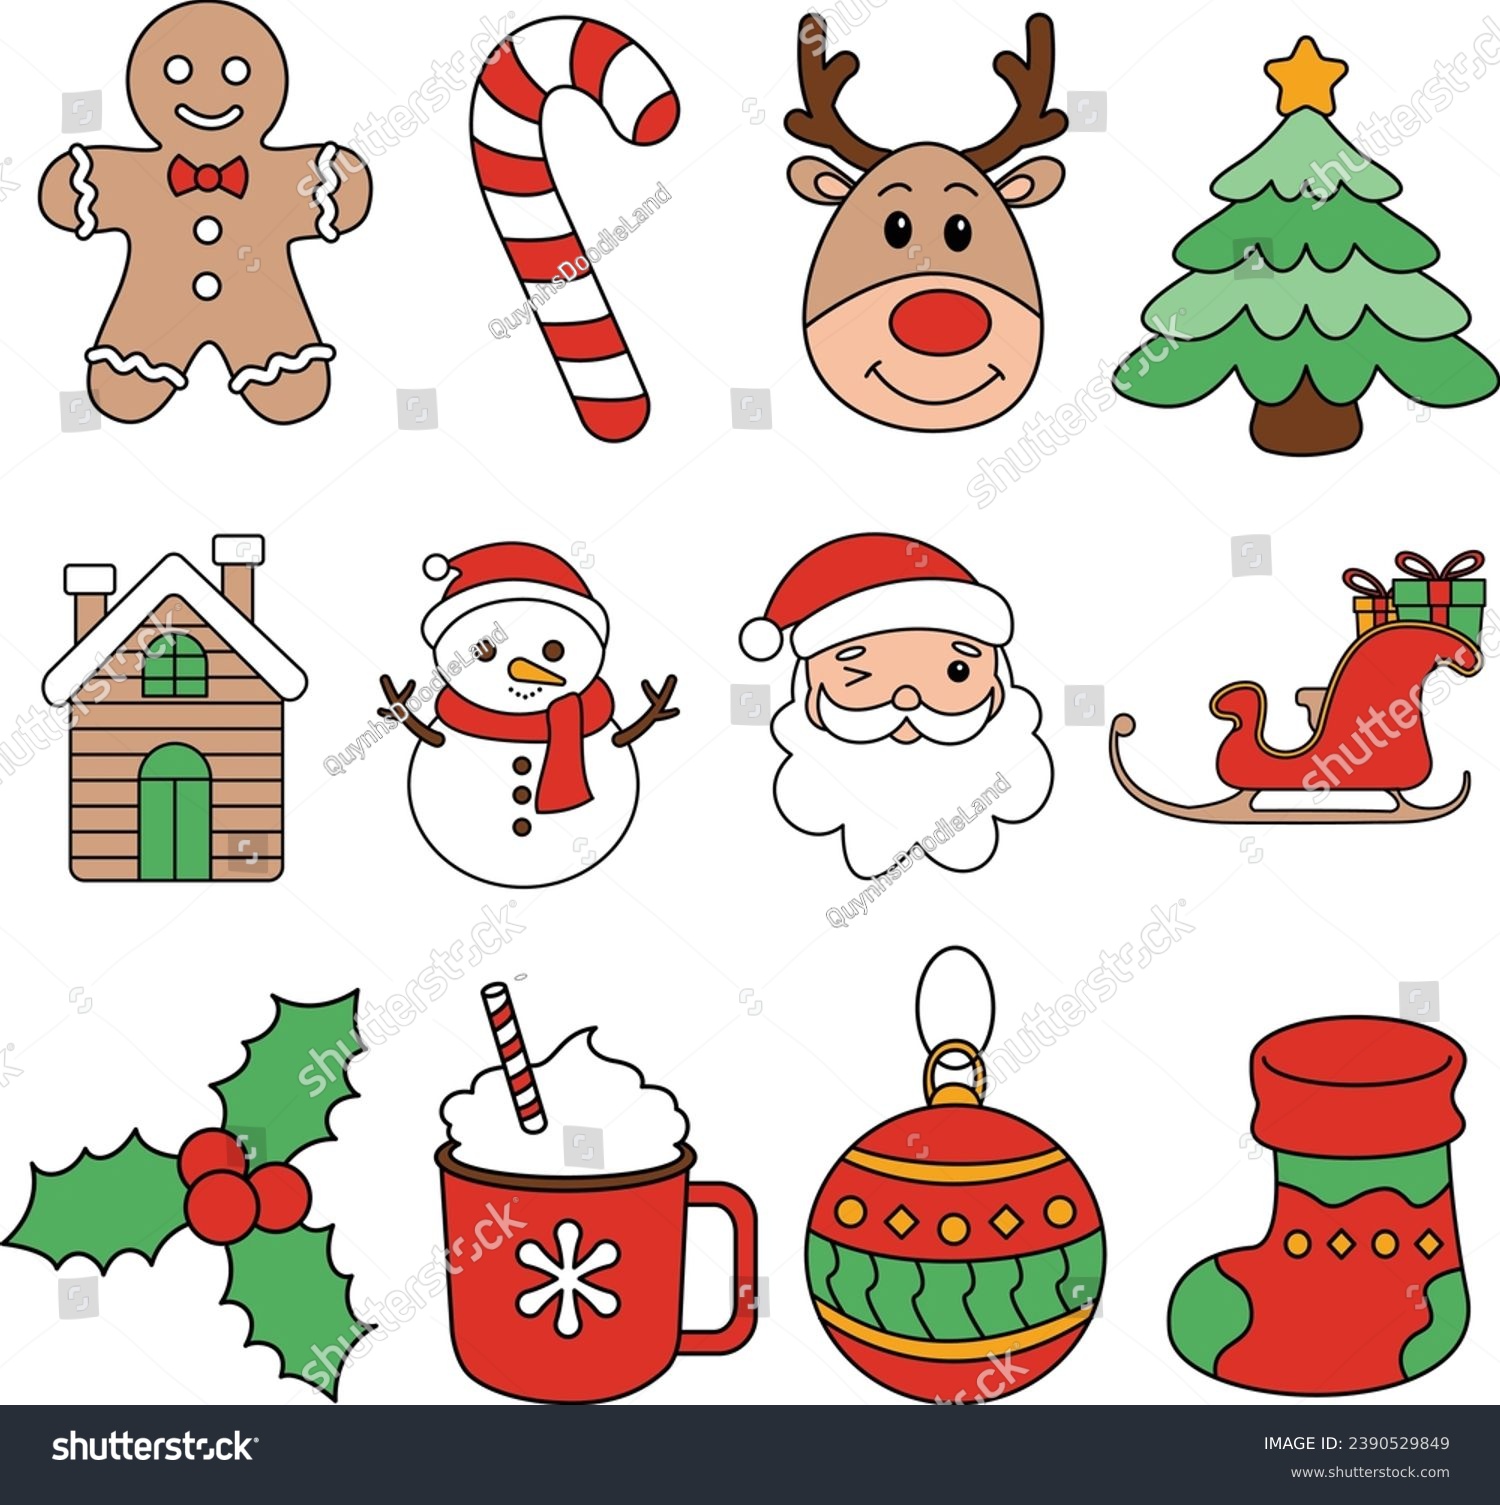 SVG of Santa Claus, Santa's sleigh, Christmas Element, Christmas decorations, Christmas Heart Items, Doodles Heart, Christmas Pattern Heart, Noel svg